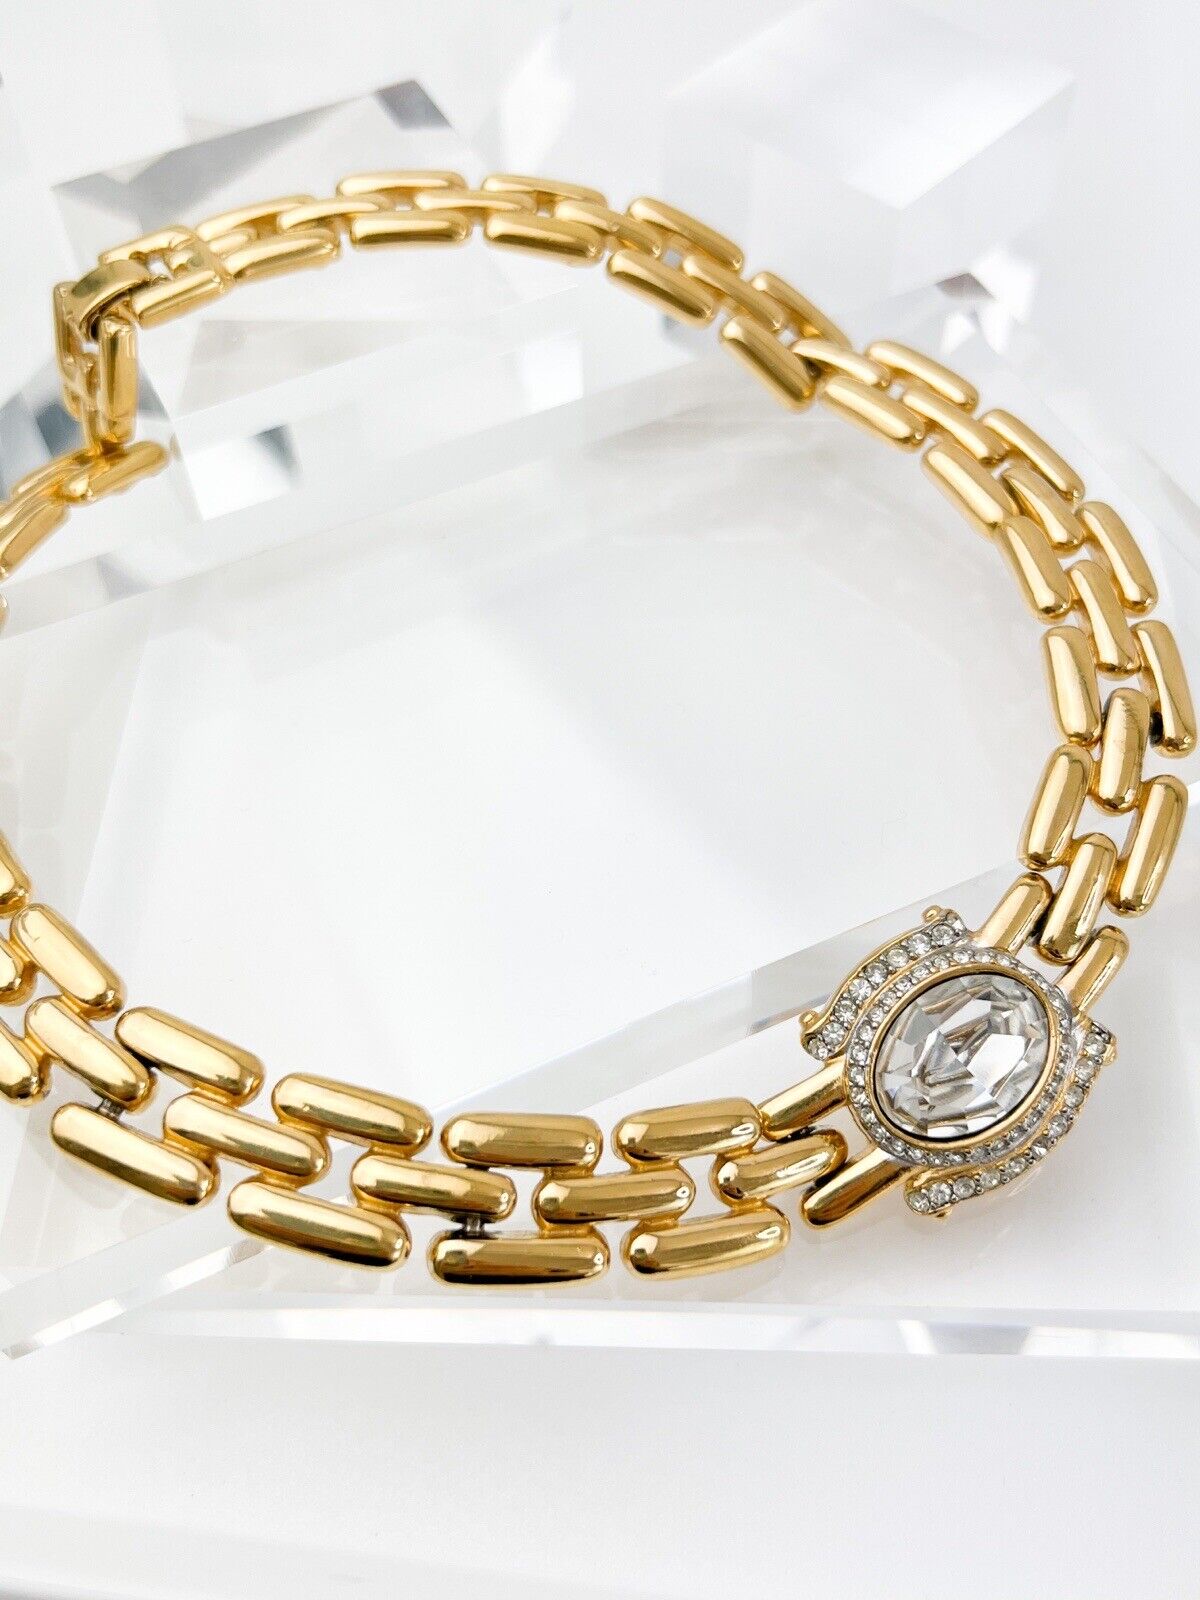 Givenchy Vintage Necklace Choker Gold